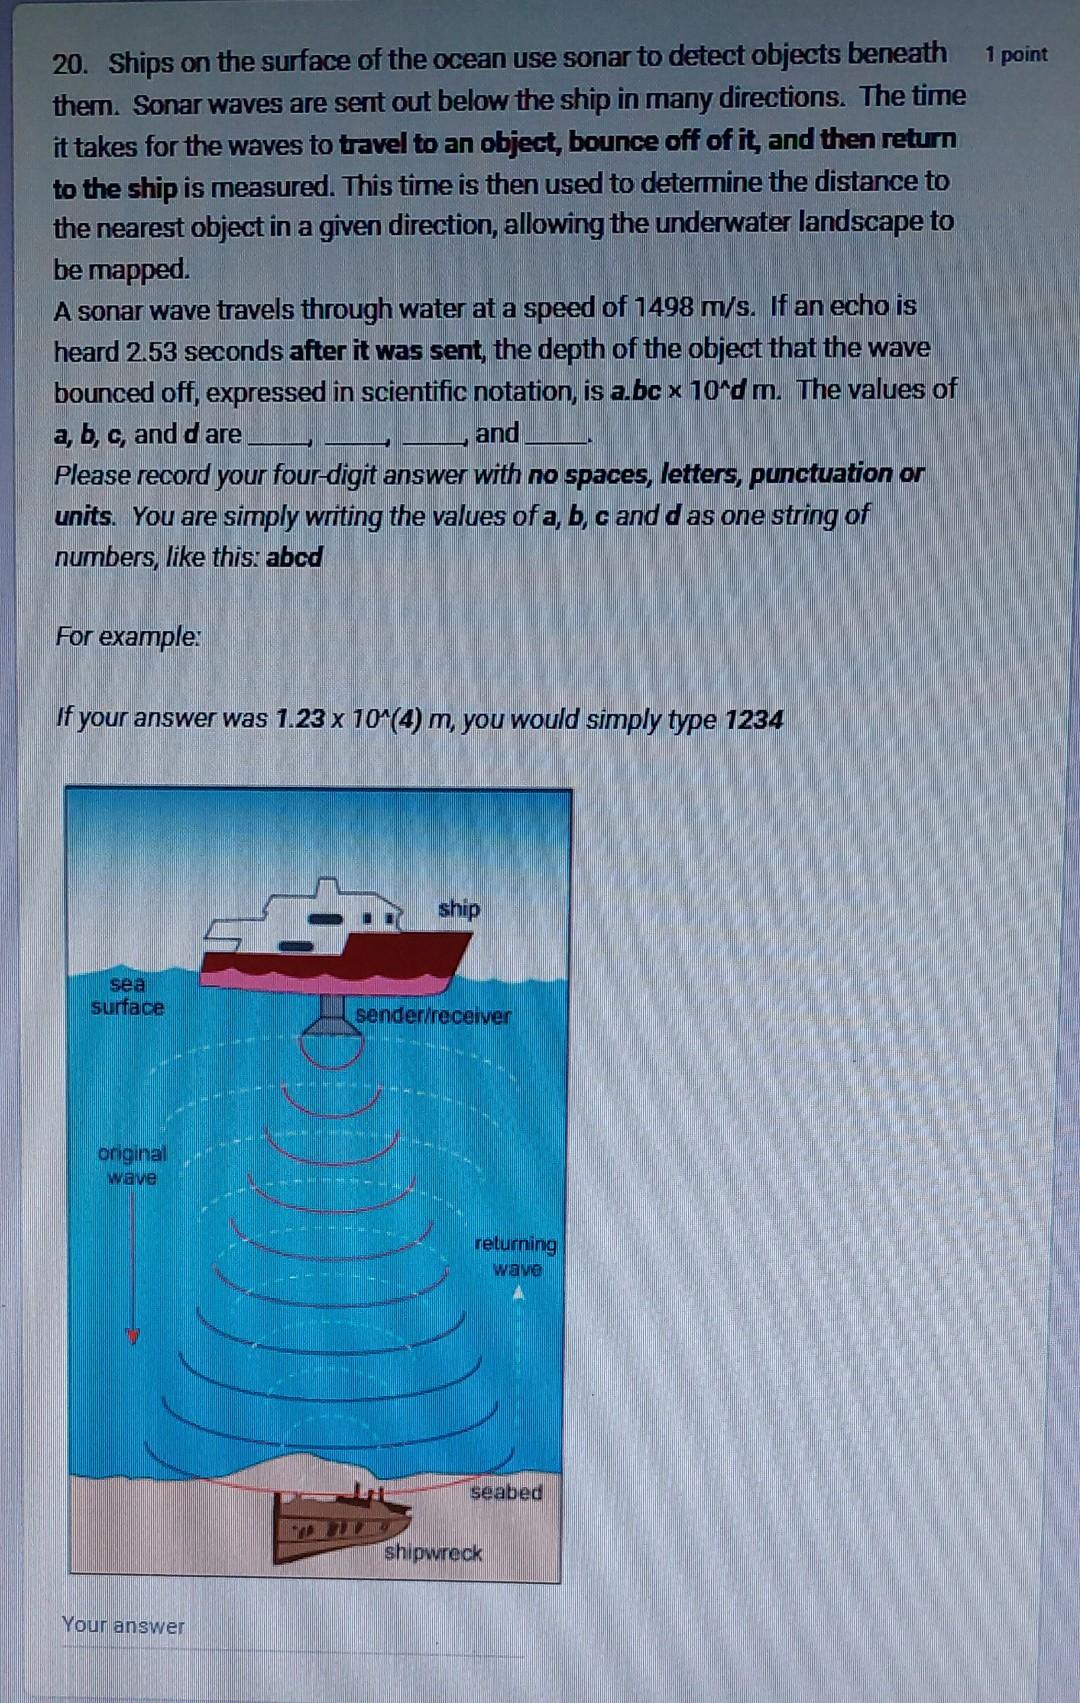 ship sonar